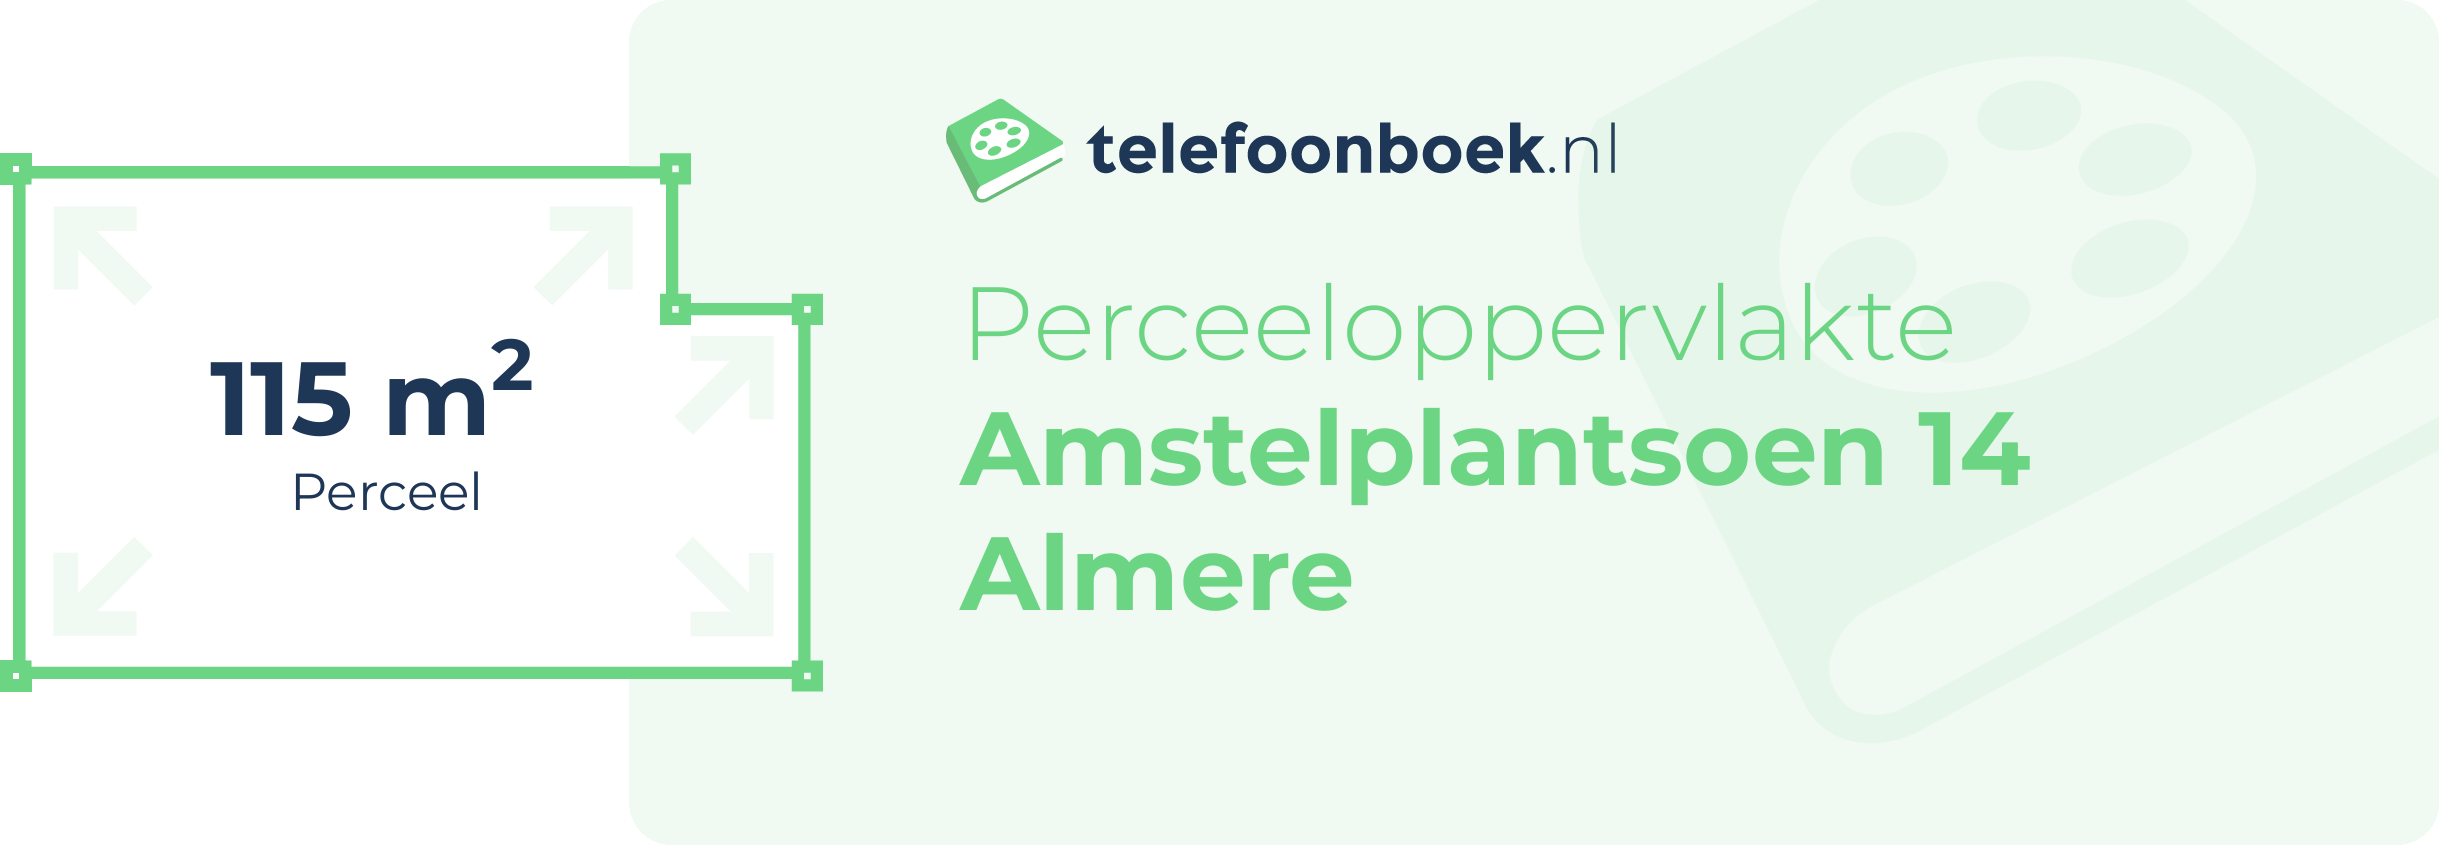 Perceeloppervlakte Amstelplantsoen 14 Almere